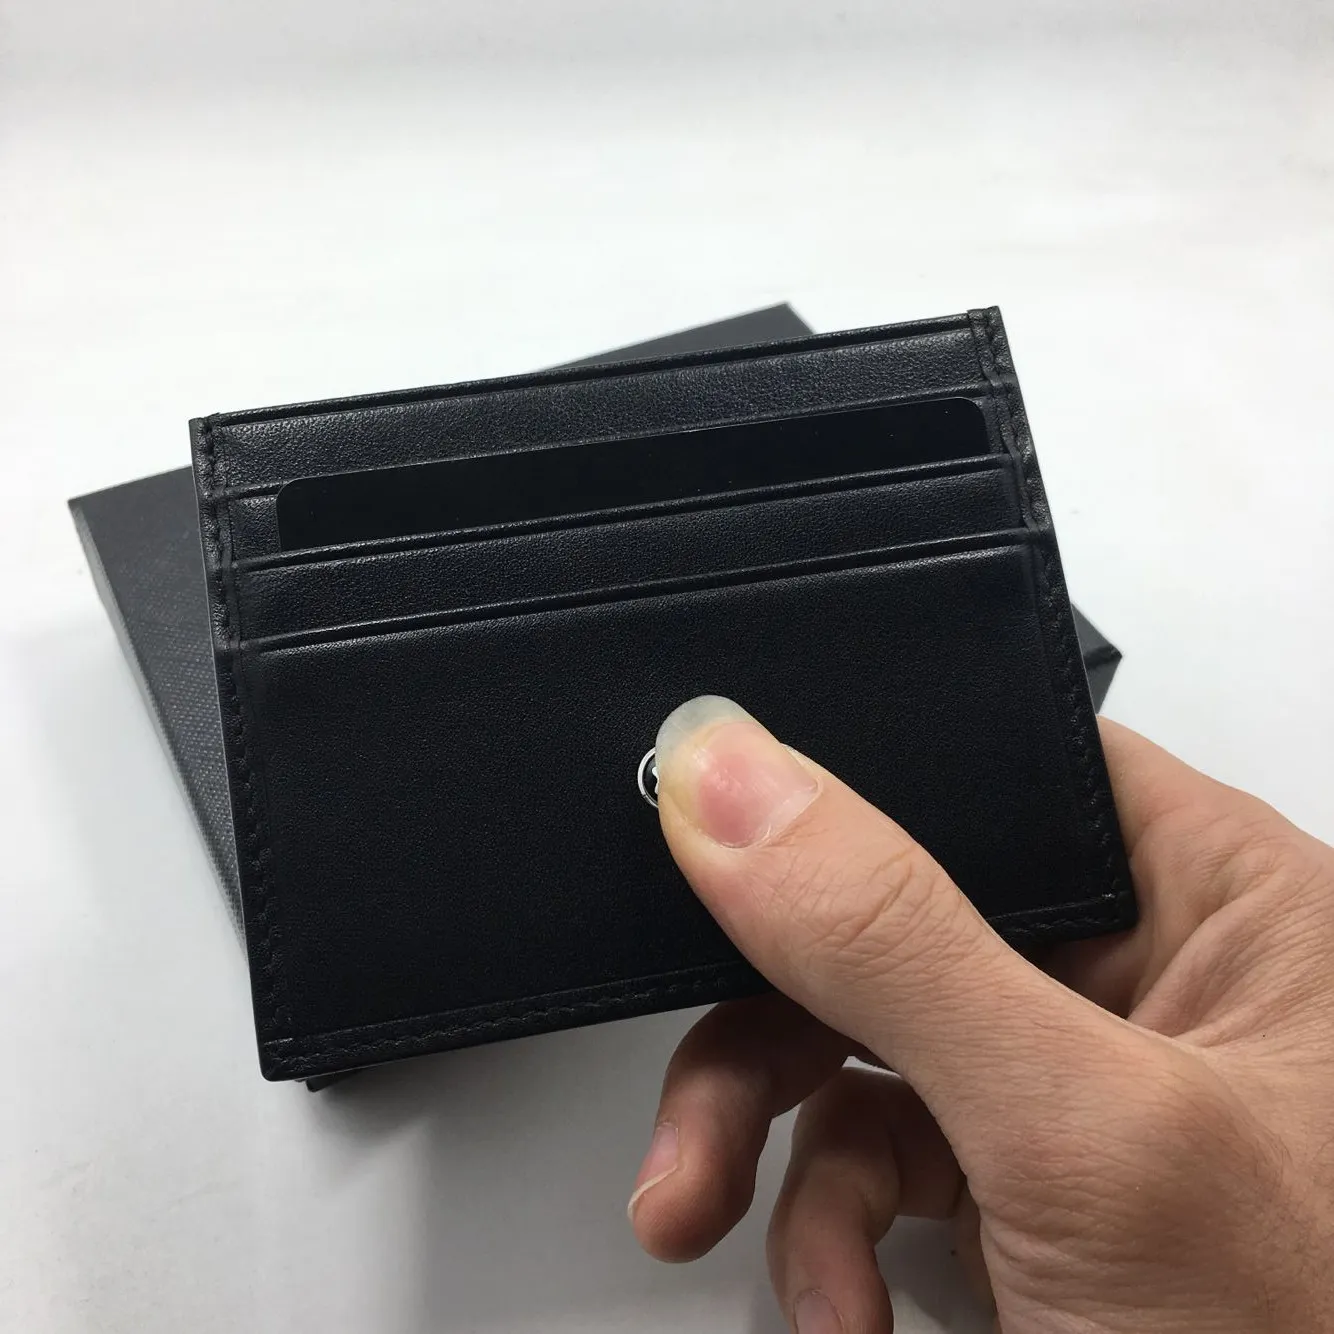 Black Genuine Leather Credit Card Holder Business Men High Quality Slim Bank Card Case 2017 New Arrivals Fashion ID Card Purse Fre196y